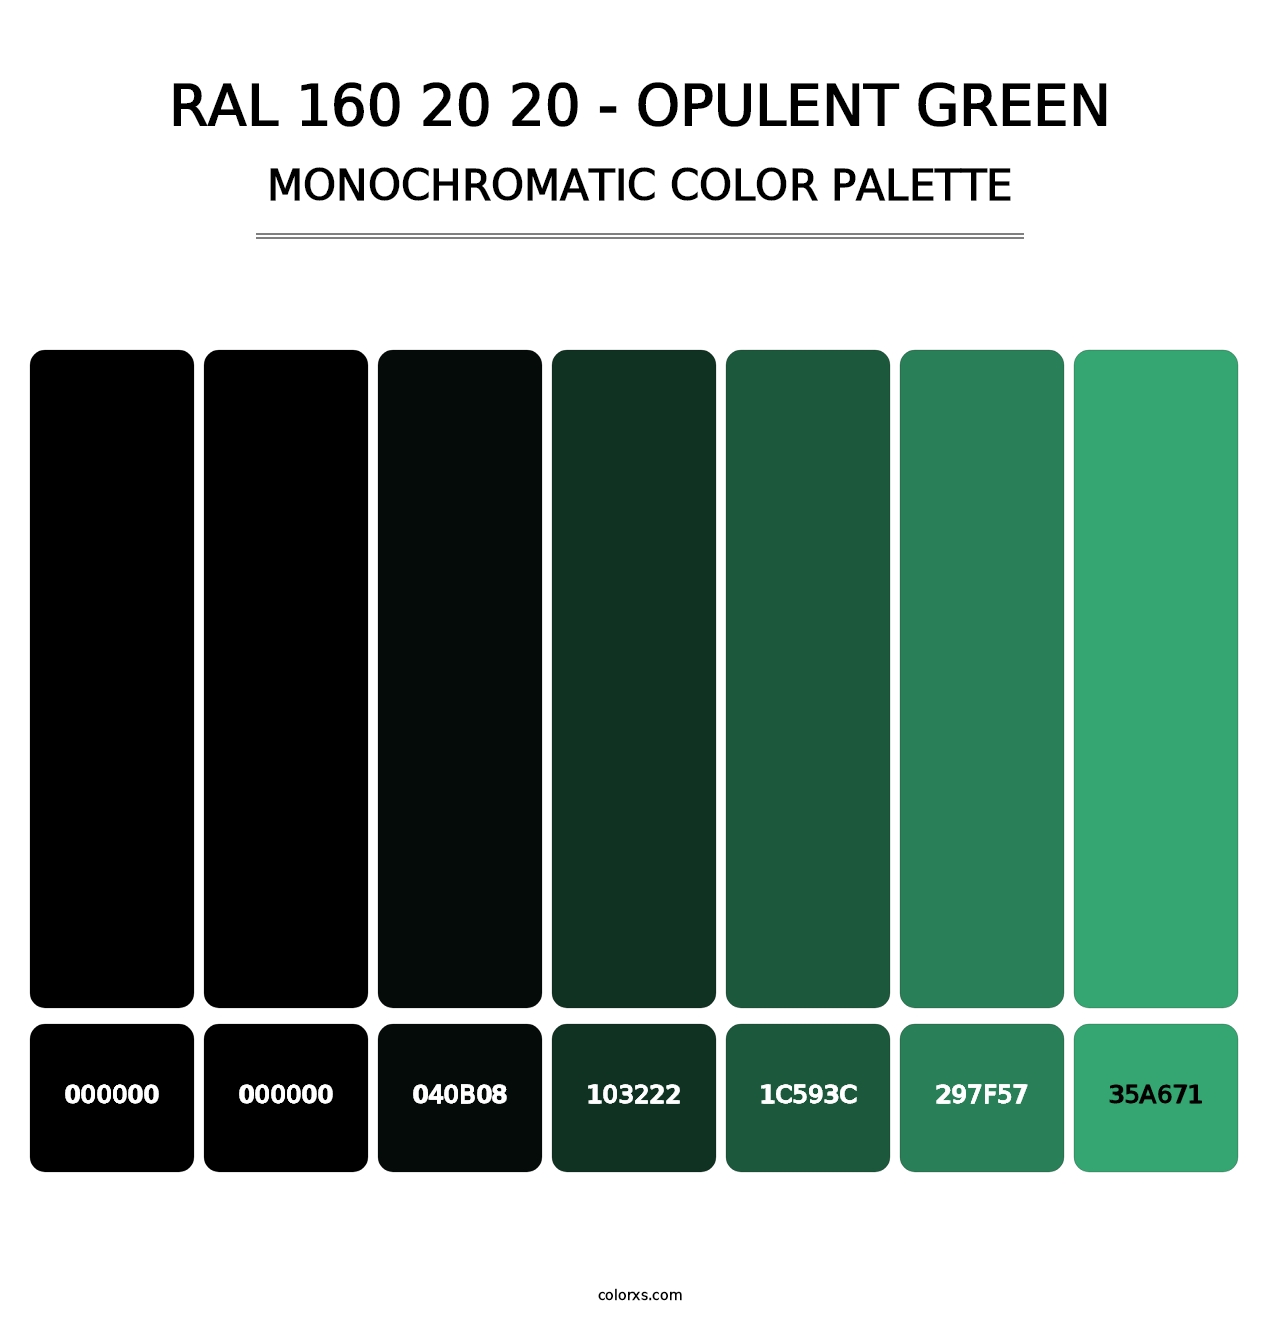 RAL 160 20 20 - Opulent Green - Monochromatic Color Palette